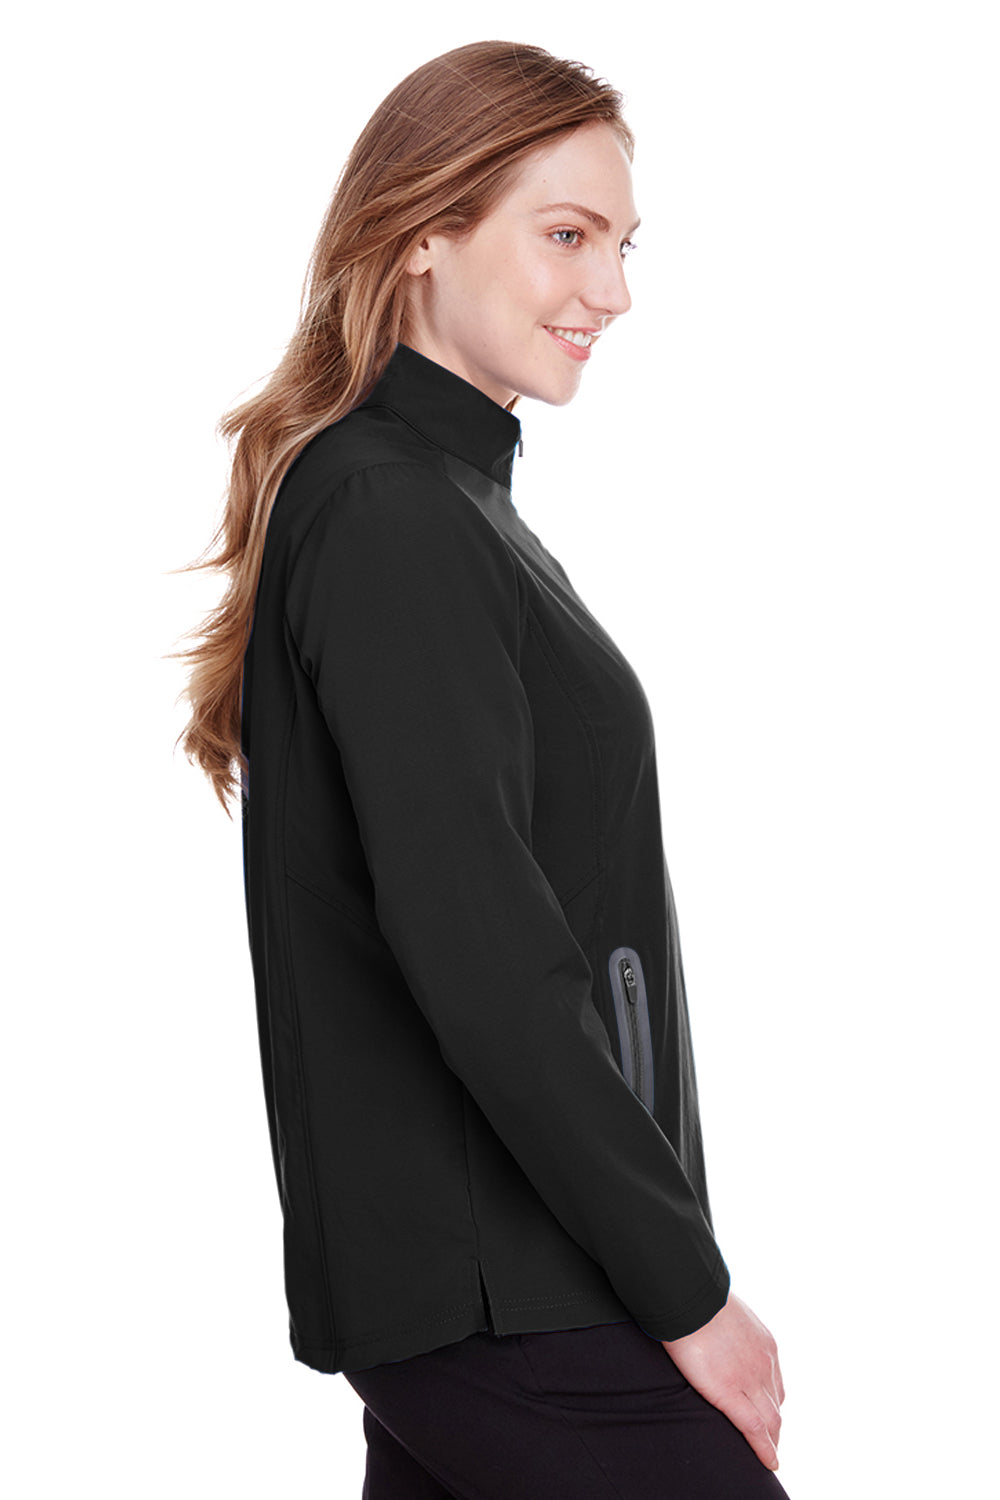 North End NE401W Womens Quest Performance Moisture Wicking 1/4 Zip Sweatshirt Black/Carbon Grey Side